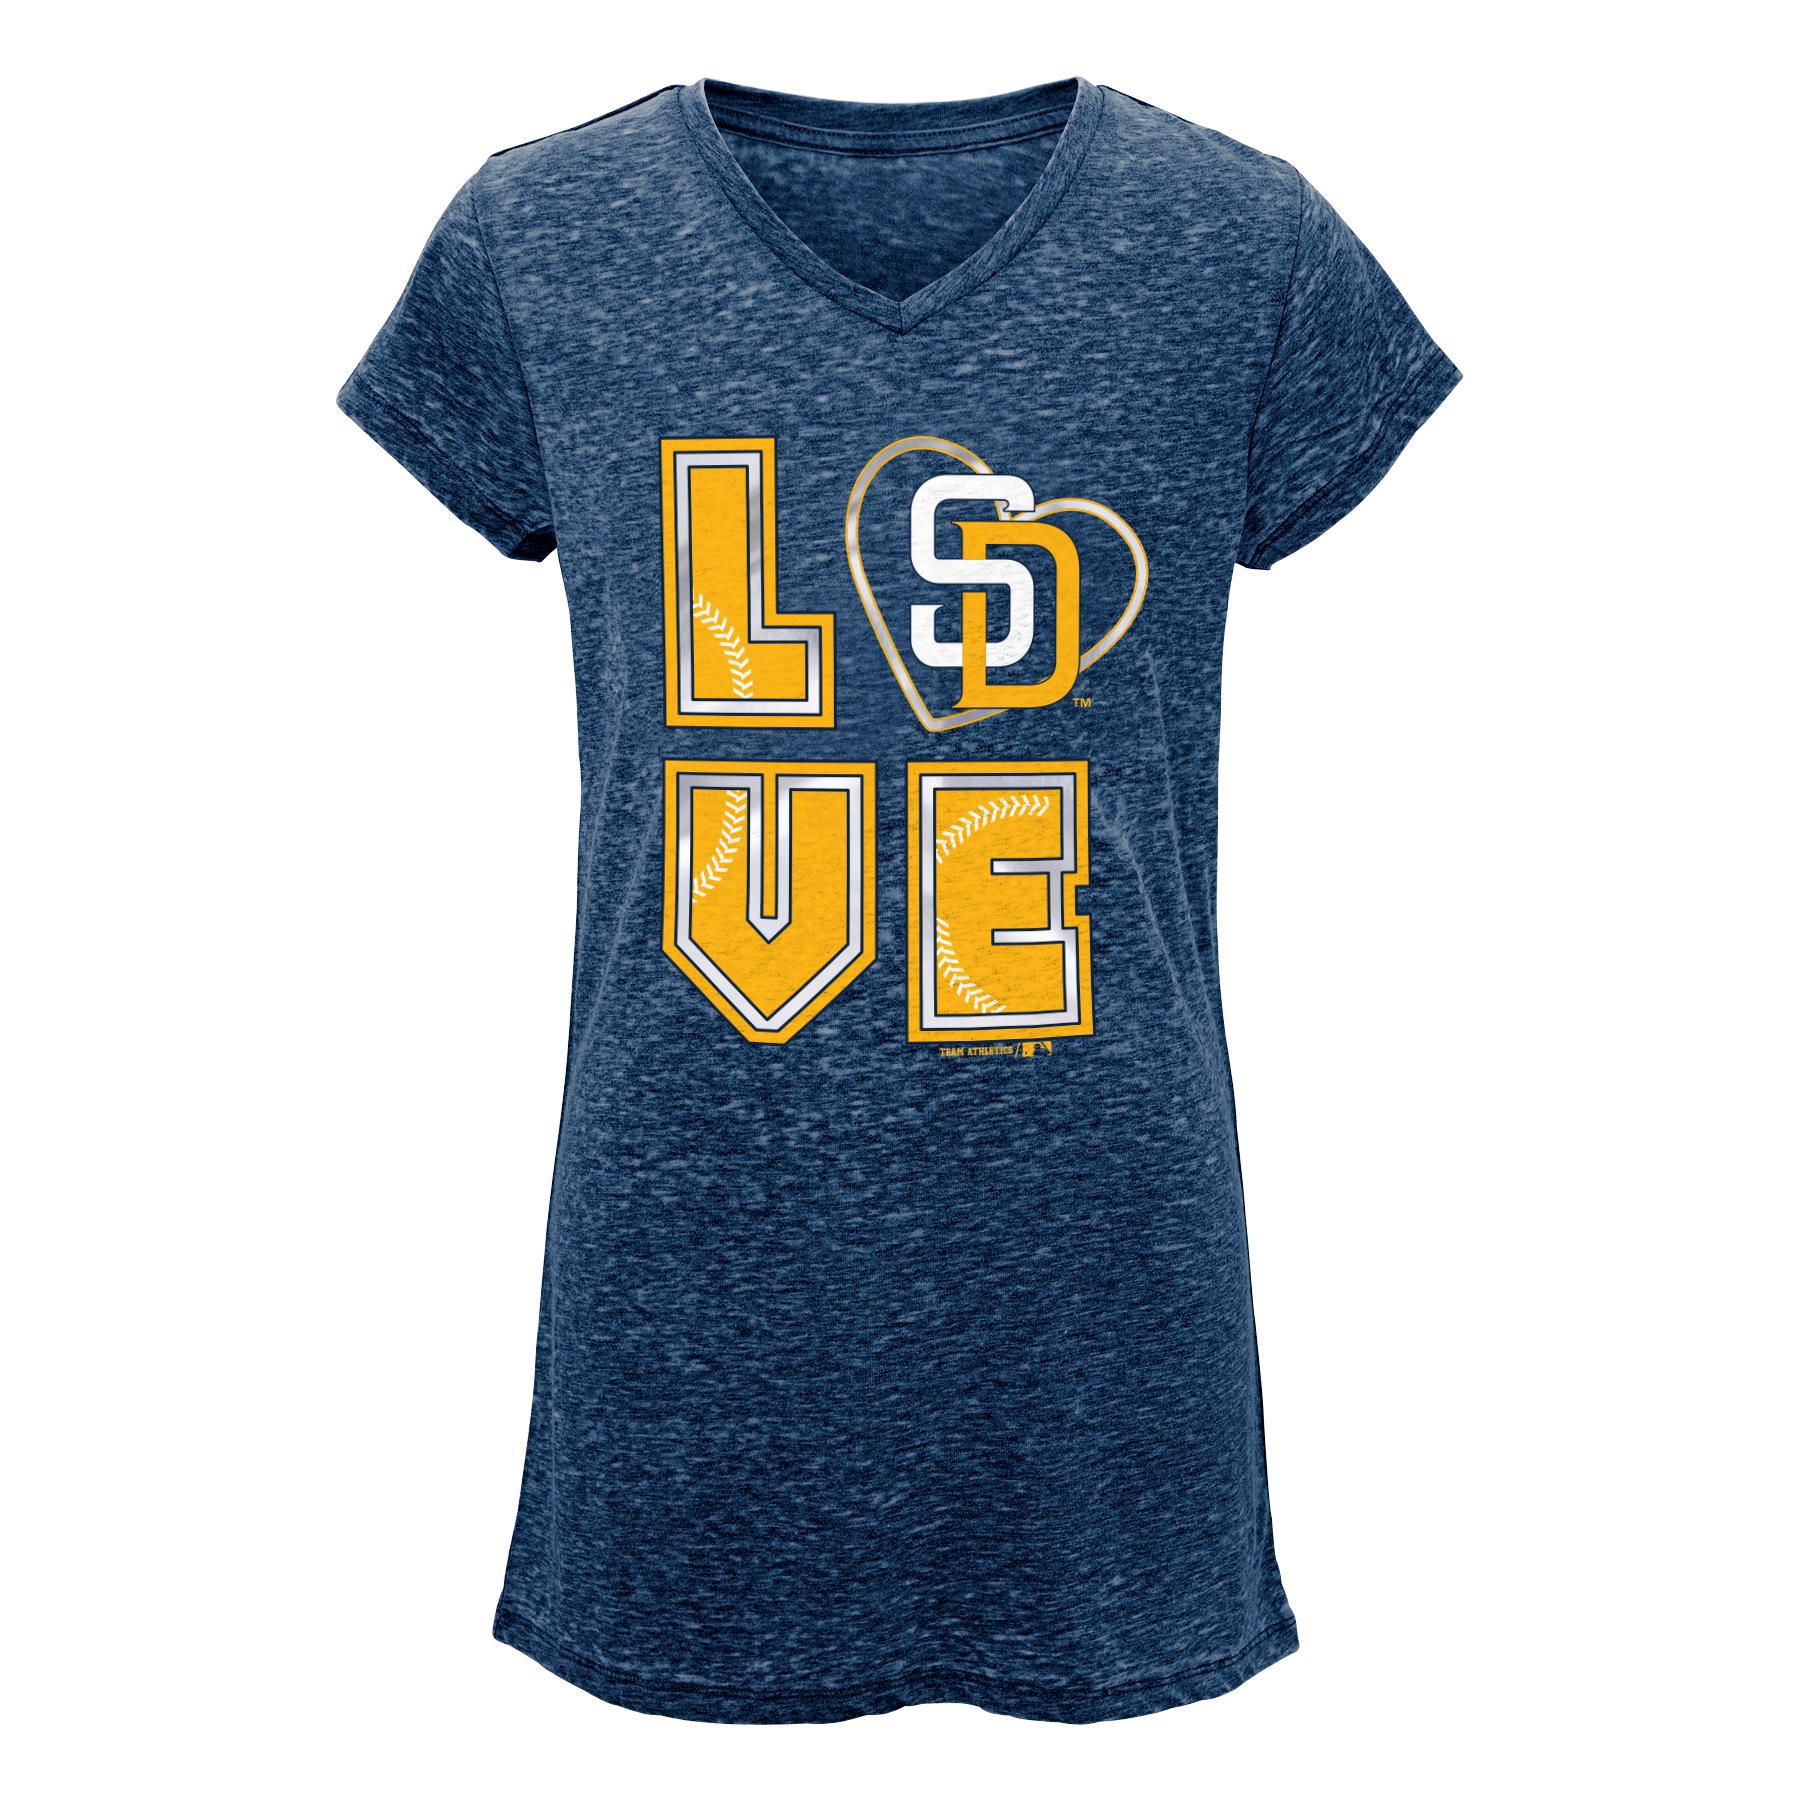 MLB Girl's Burnout T-Shirt - San Diego Padres